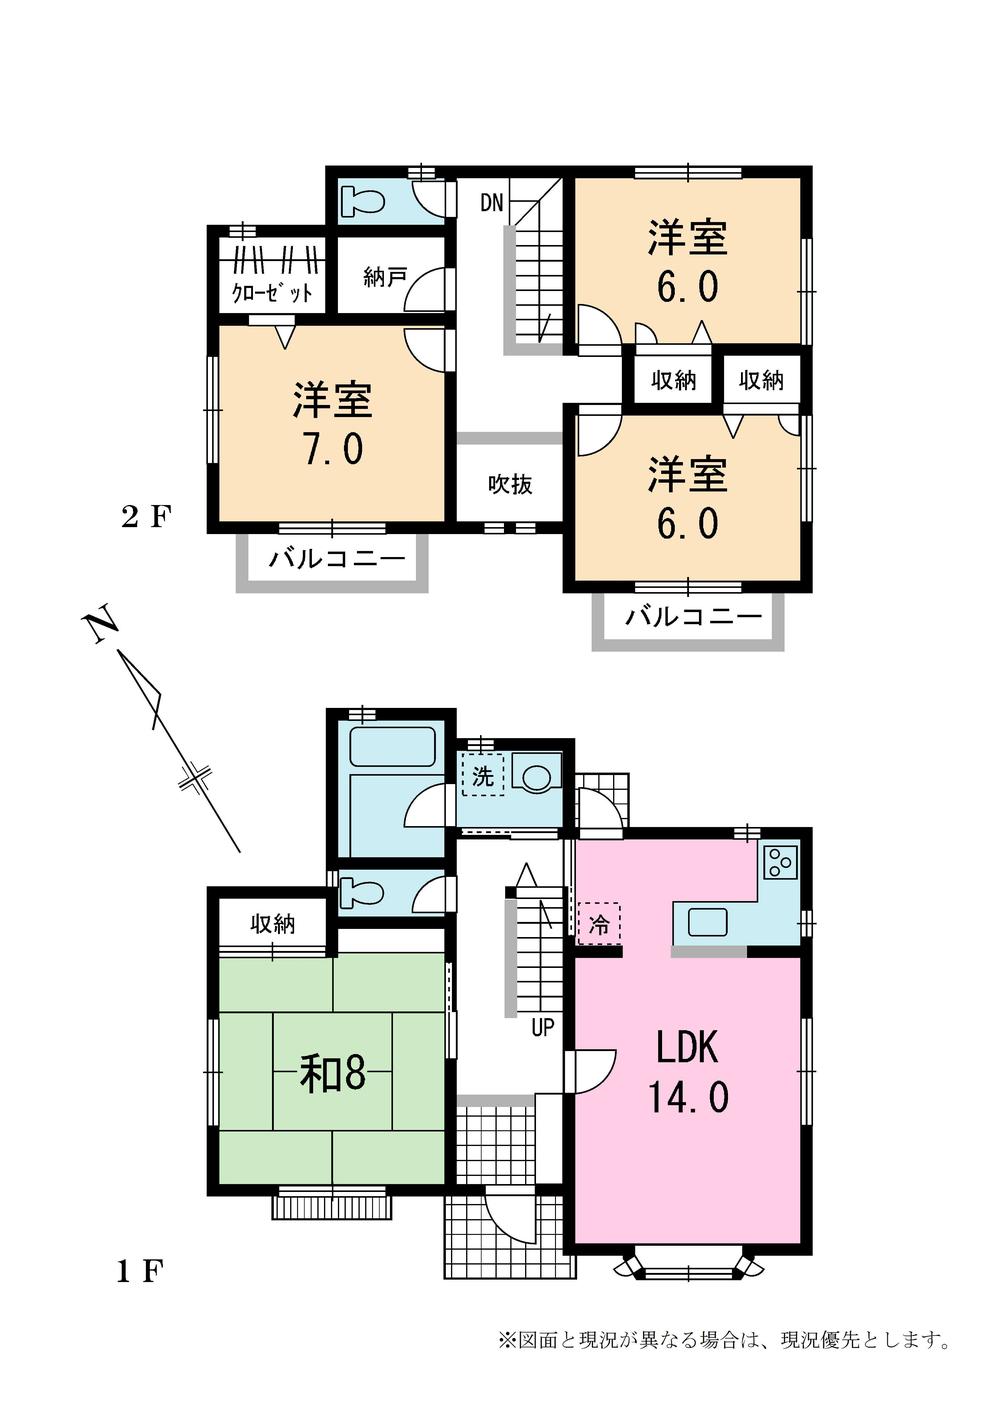 Floor plan. 44,500,000 yen, 4LDK, Land area 177.53 sq m , Building area 124.96 sq m